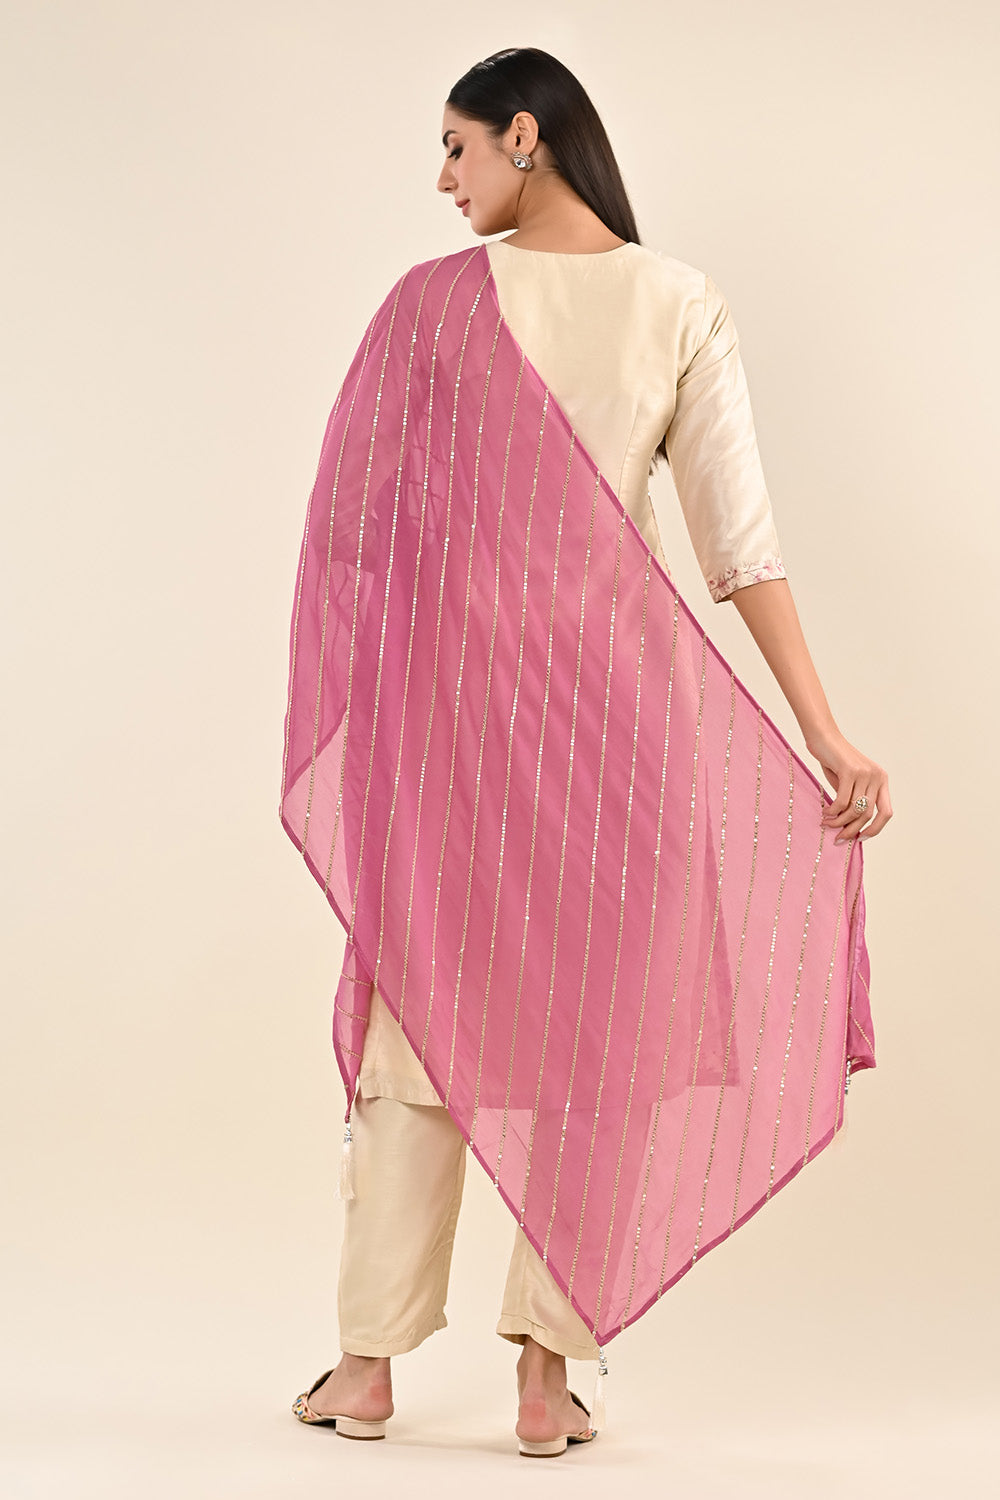 Cream Color Chanderi Resham Embroidered Straight Suit